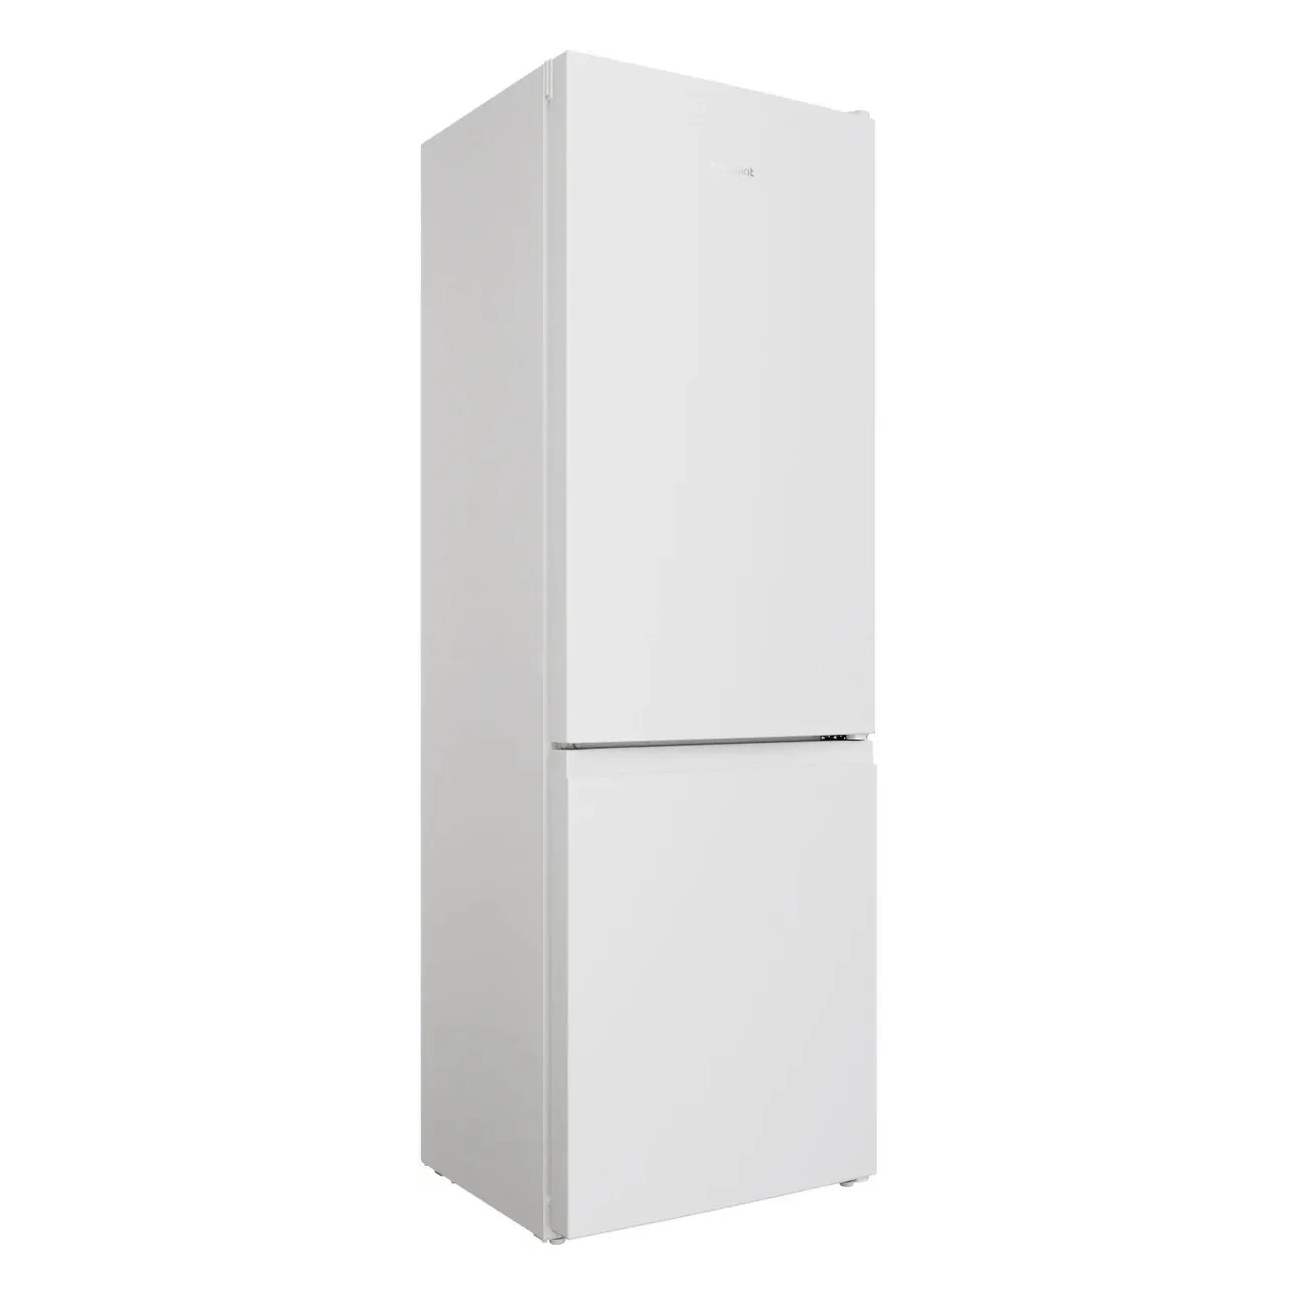 Холодильник HotPoint HT 4180 W белый, серебристый двухкамерный холодильник hotpoint hts 4180 s серебристый